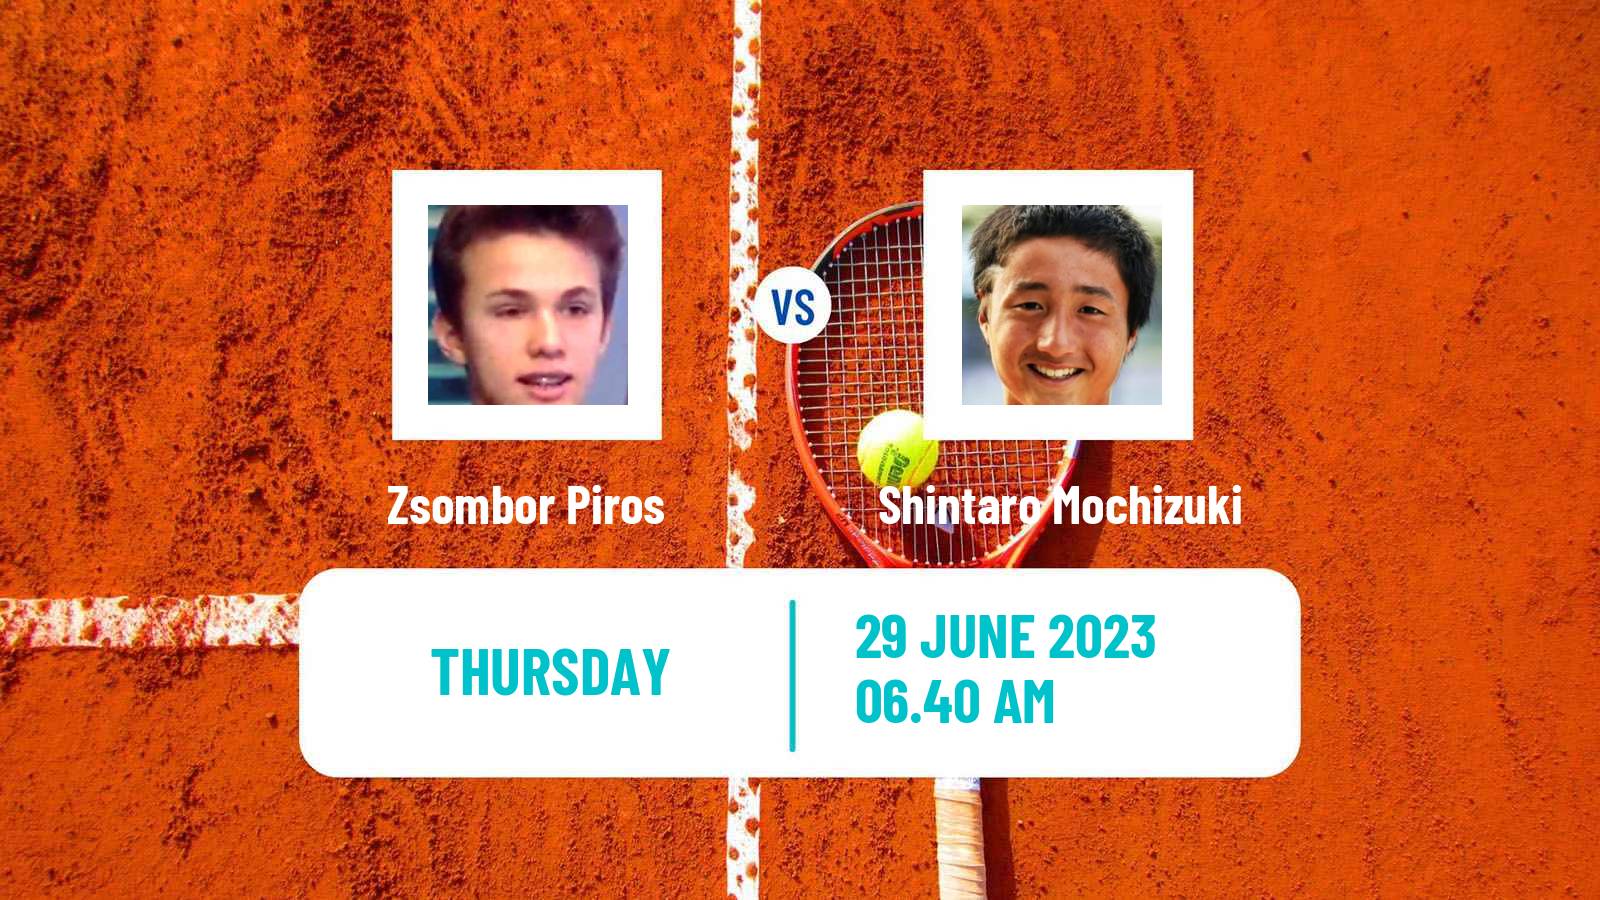 Tennis ATP Wimbledon Zsombor Piros - Shintaro Mochizuki